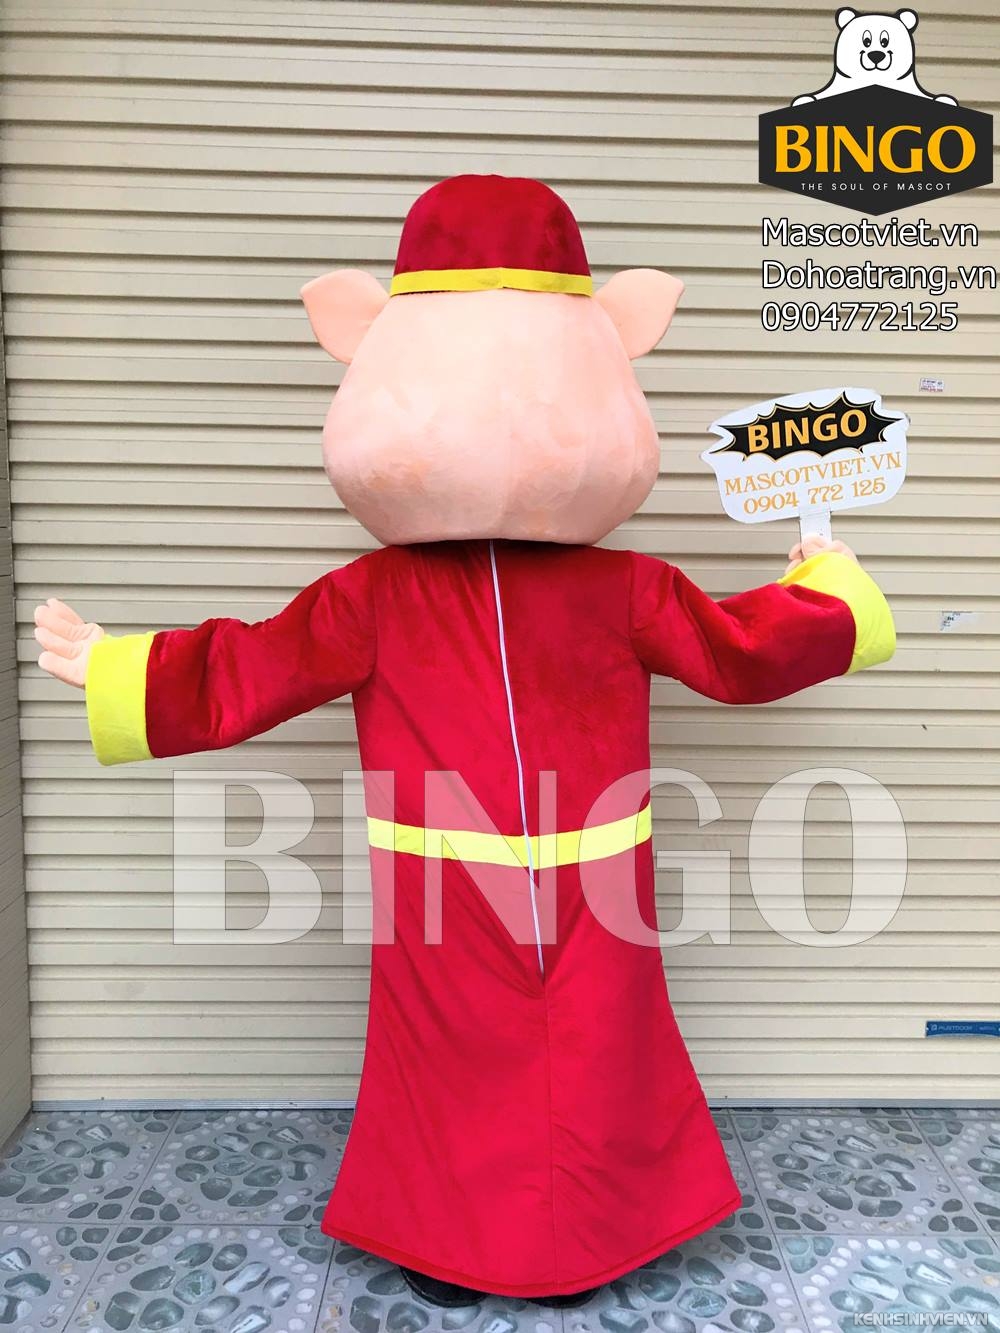 mascot-heo-than-tai-nu-bingo-costumes-0904772125-3-.jpg